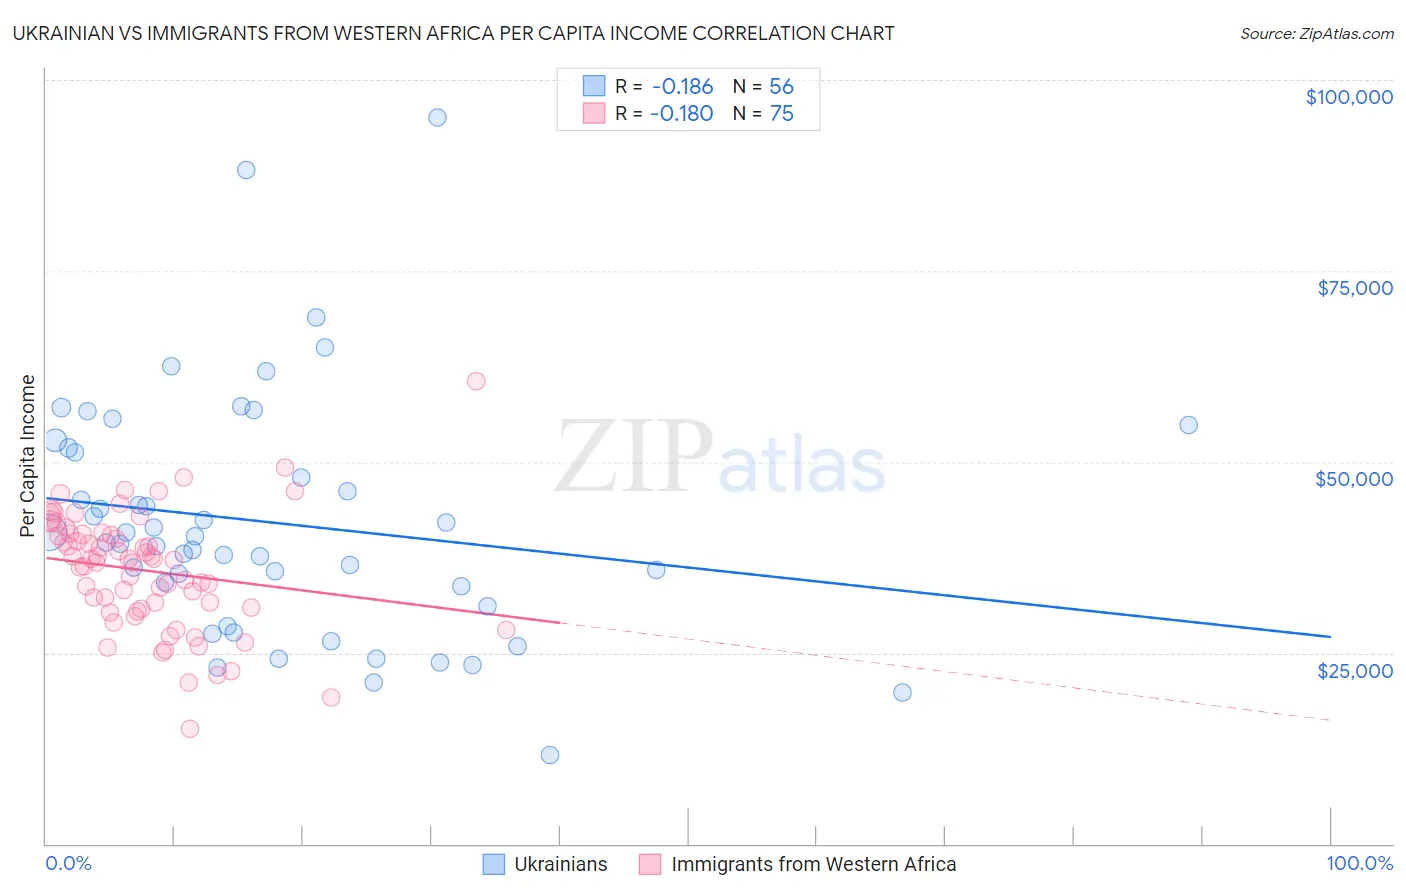 Ukrainian vs Immigrants from Western Africa Per Capita Income